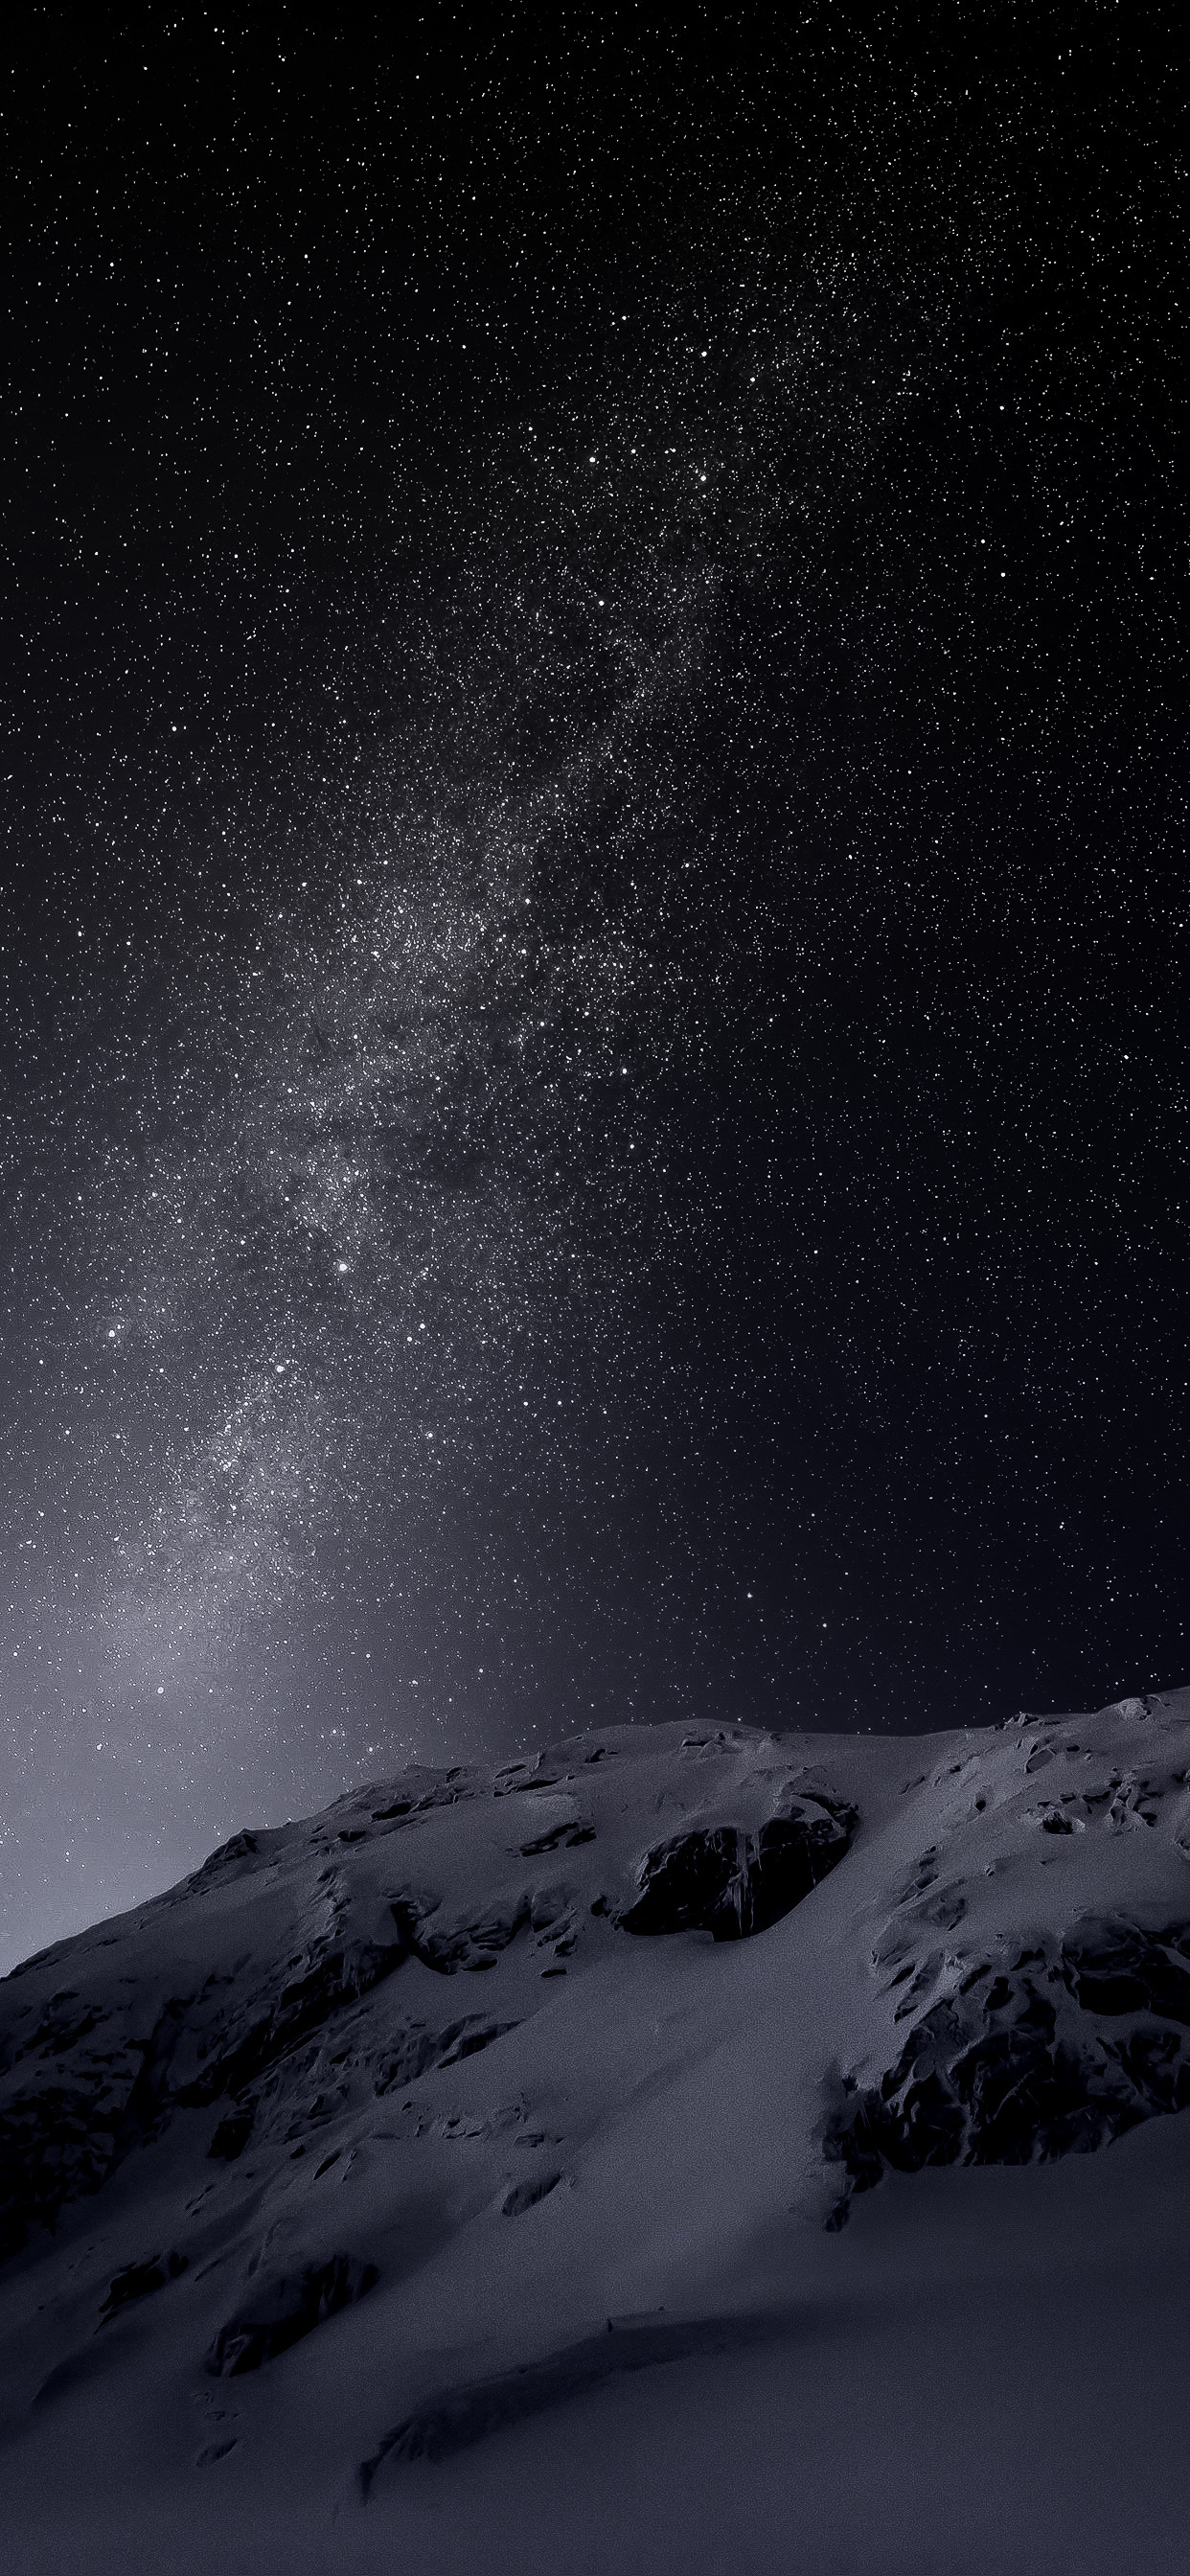 iOS 8 dark night sky iphone wallpaper ar72014